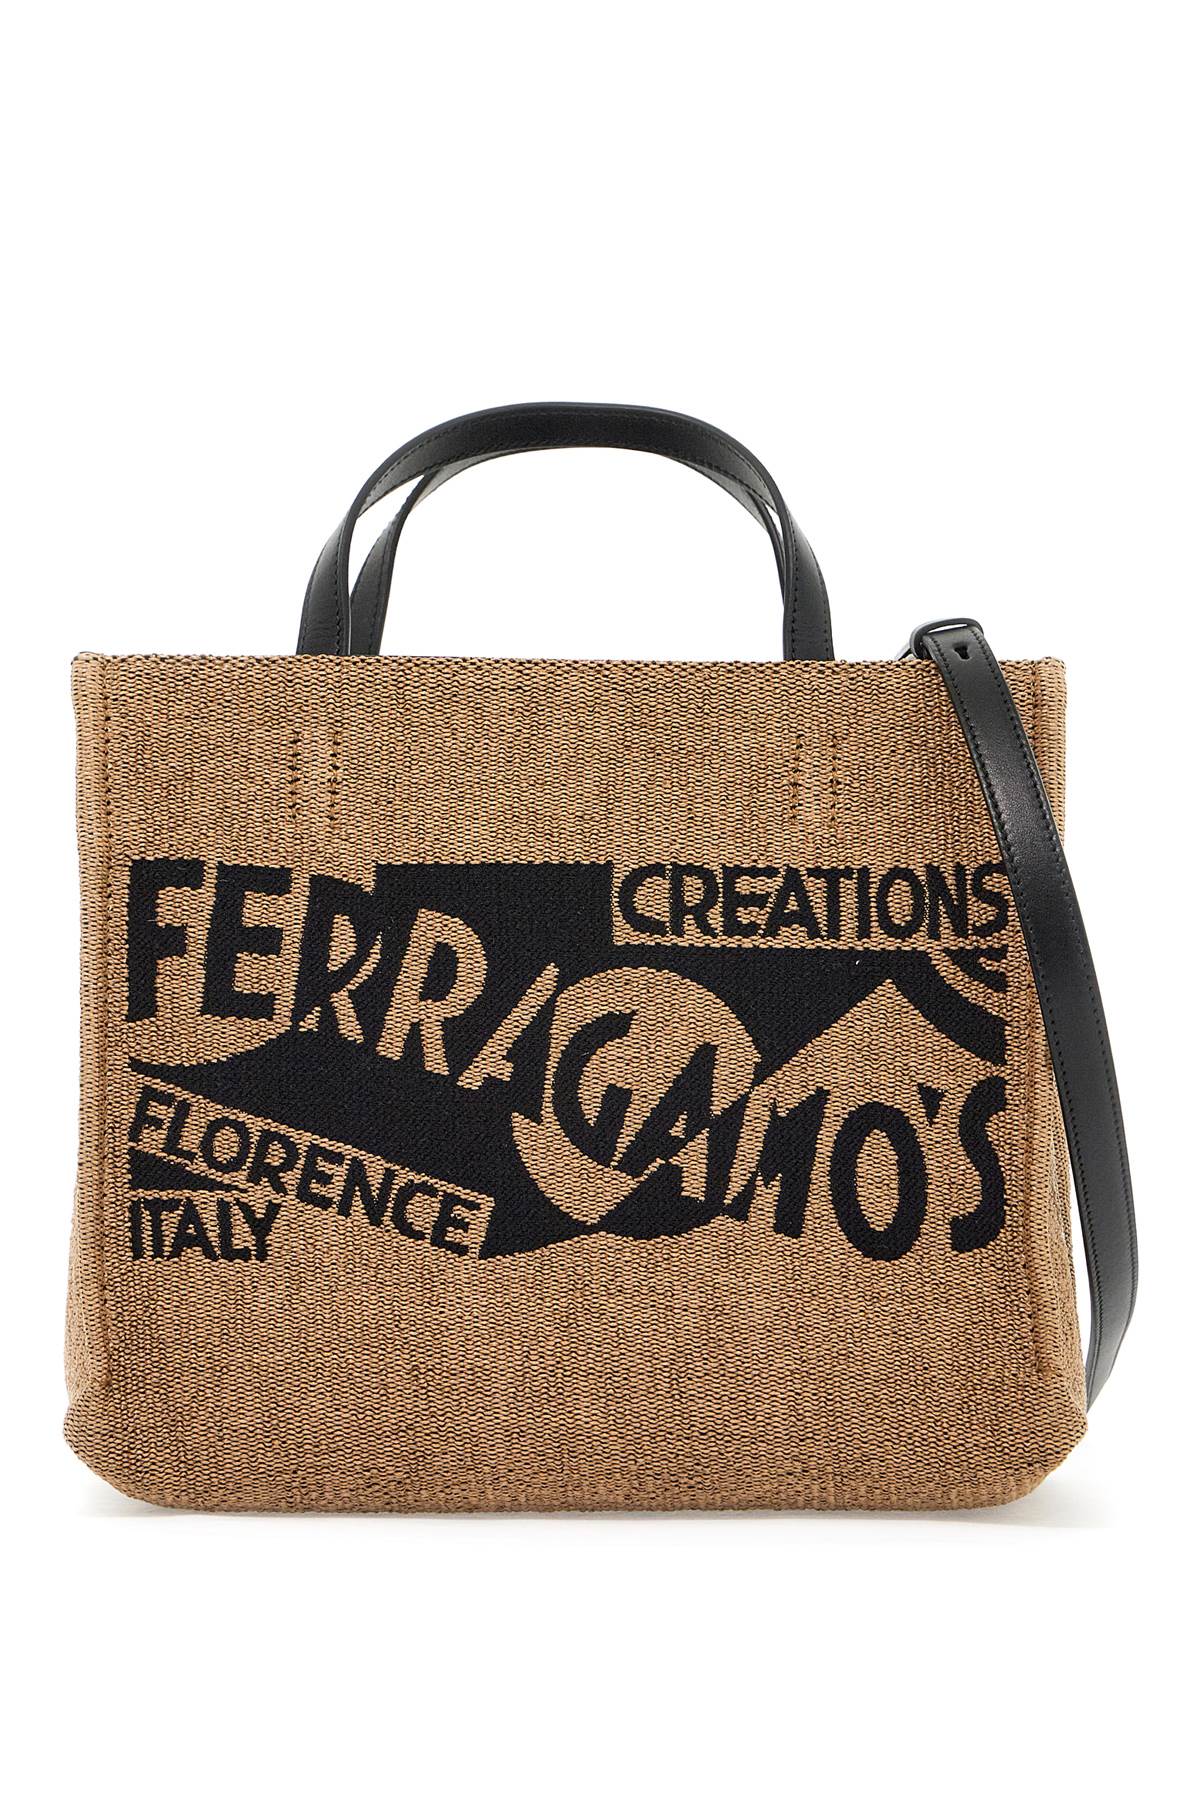 FERRAGAMO LOGO PRINTED SMALL Tote Handbag Handbag